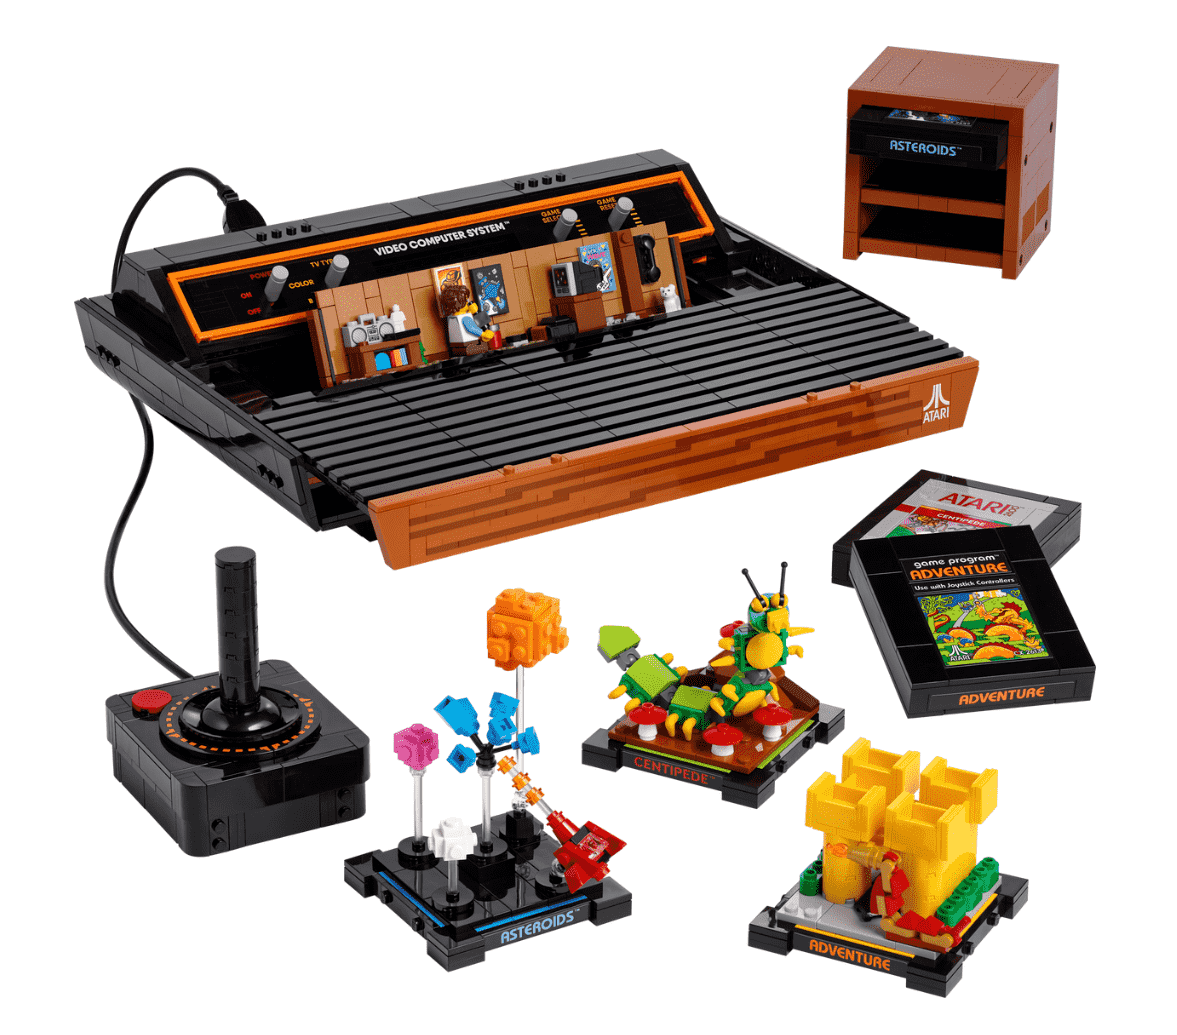 Ensemble complet Lego Atari 2600